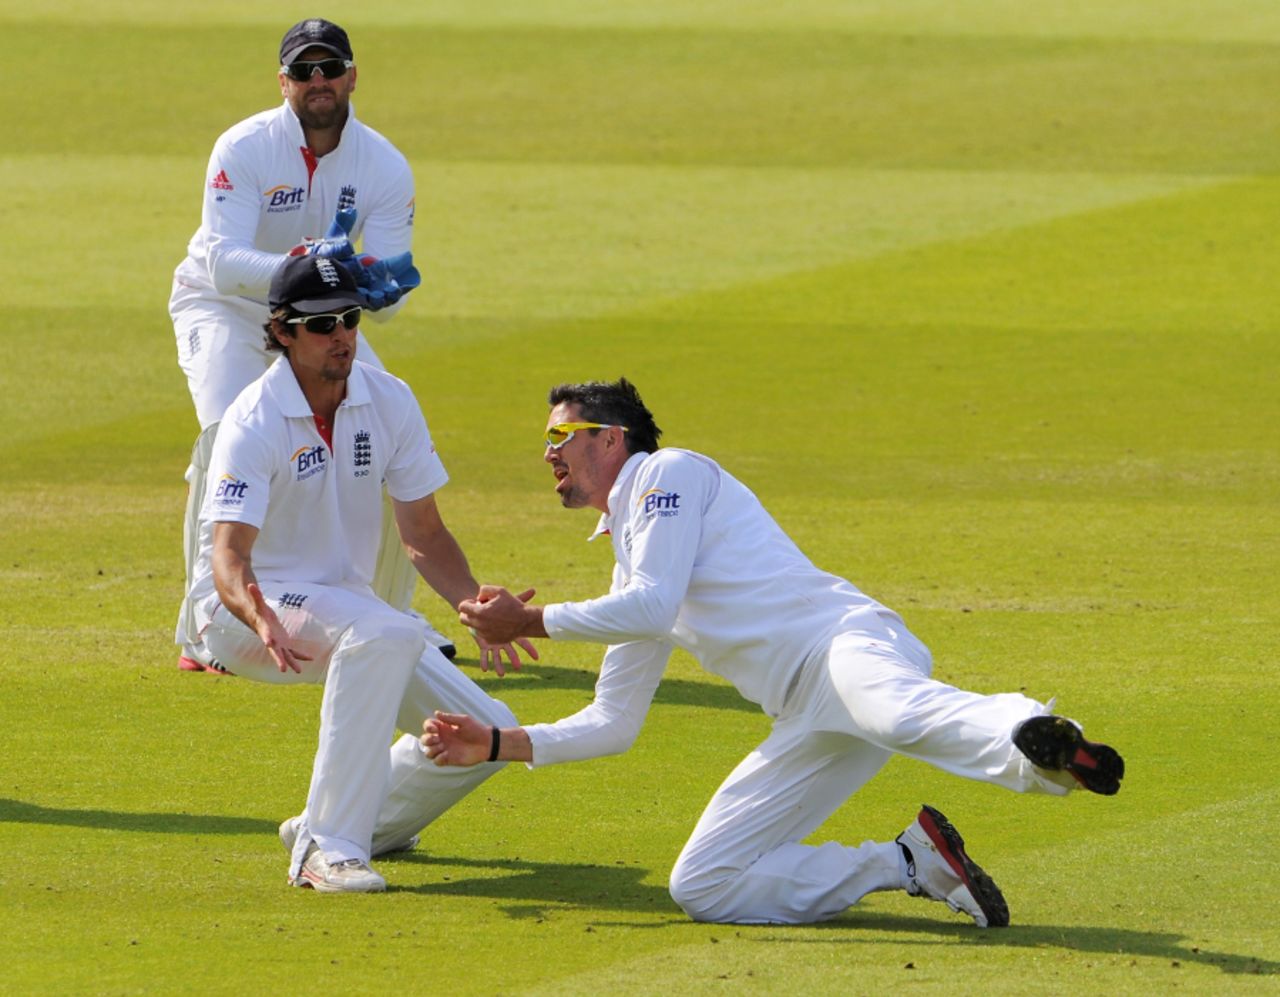 Kevin Pietersen held a good catch at fourth slip to dismiss Mahela Jayawardene, England v Sri Lanka, 2nd Test, Lord's, 5th day, June 7, 2011